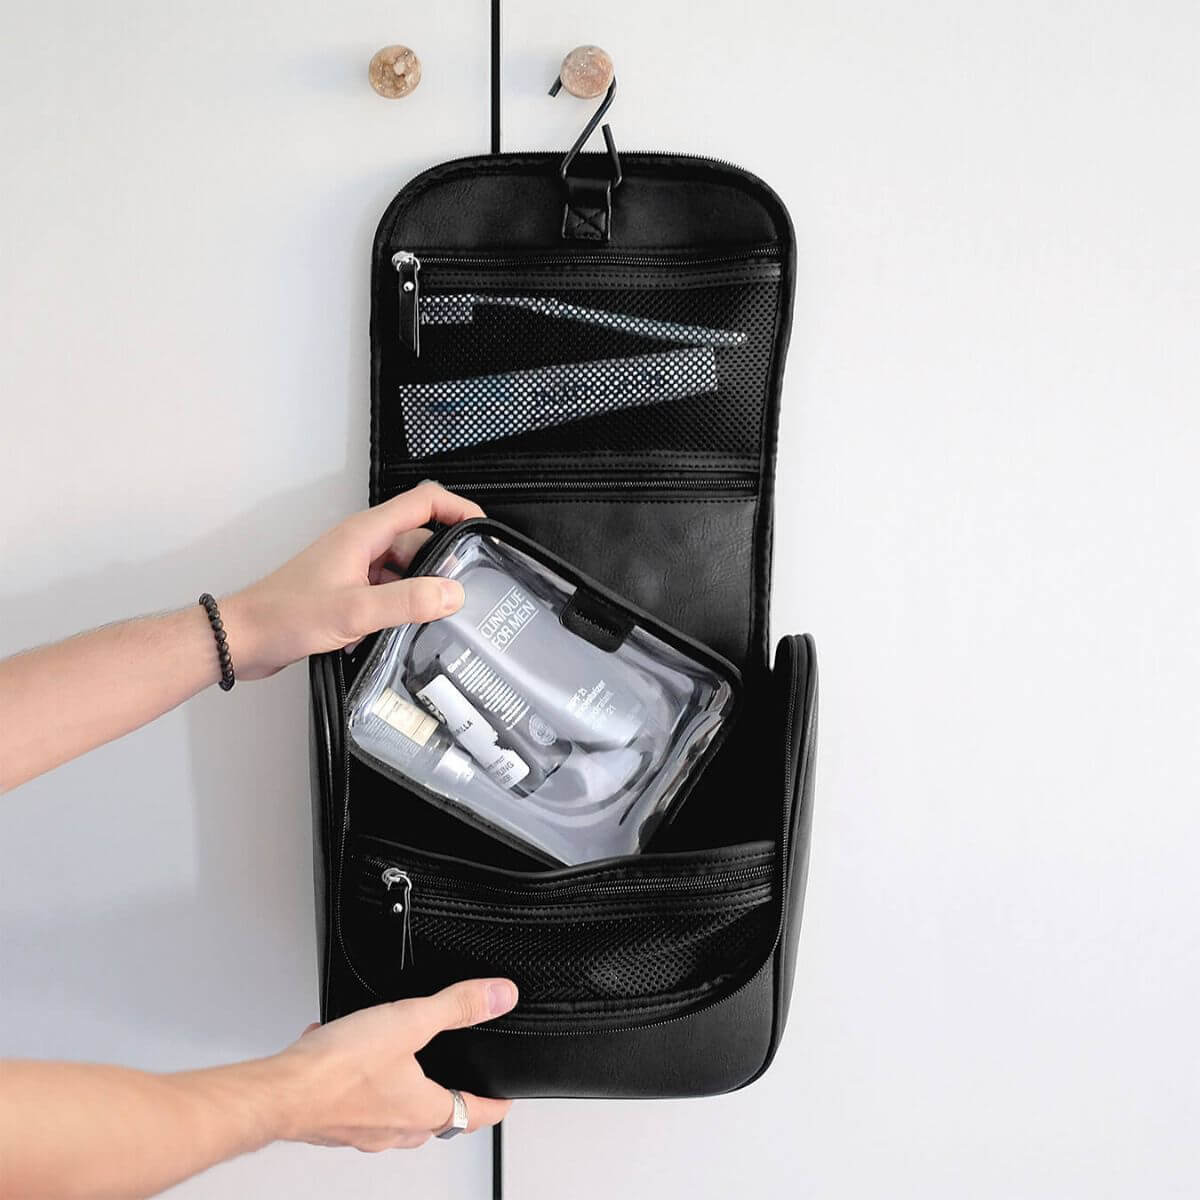 Minimalist Toiletries: How To Pack A Travel Toiletries Kit